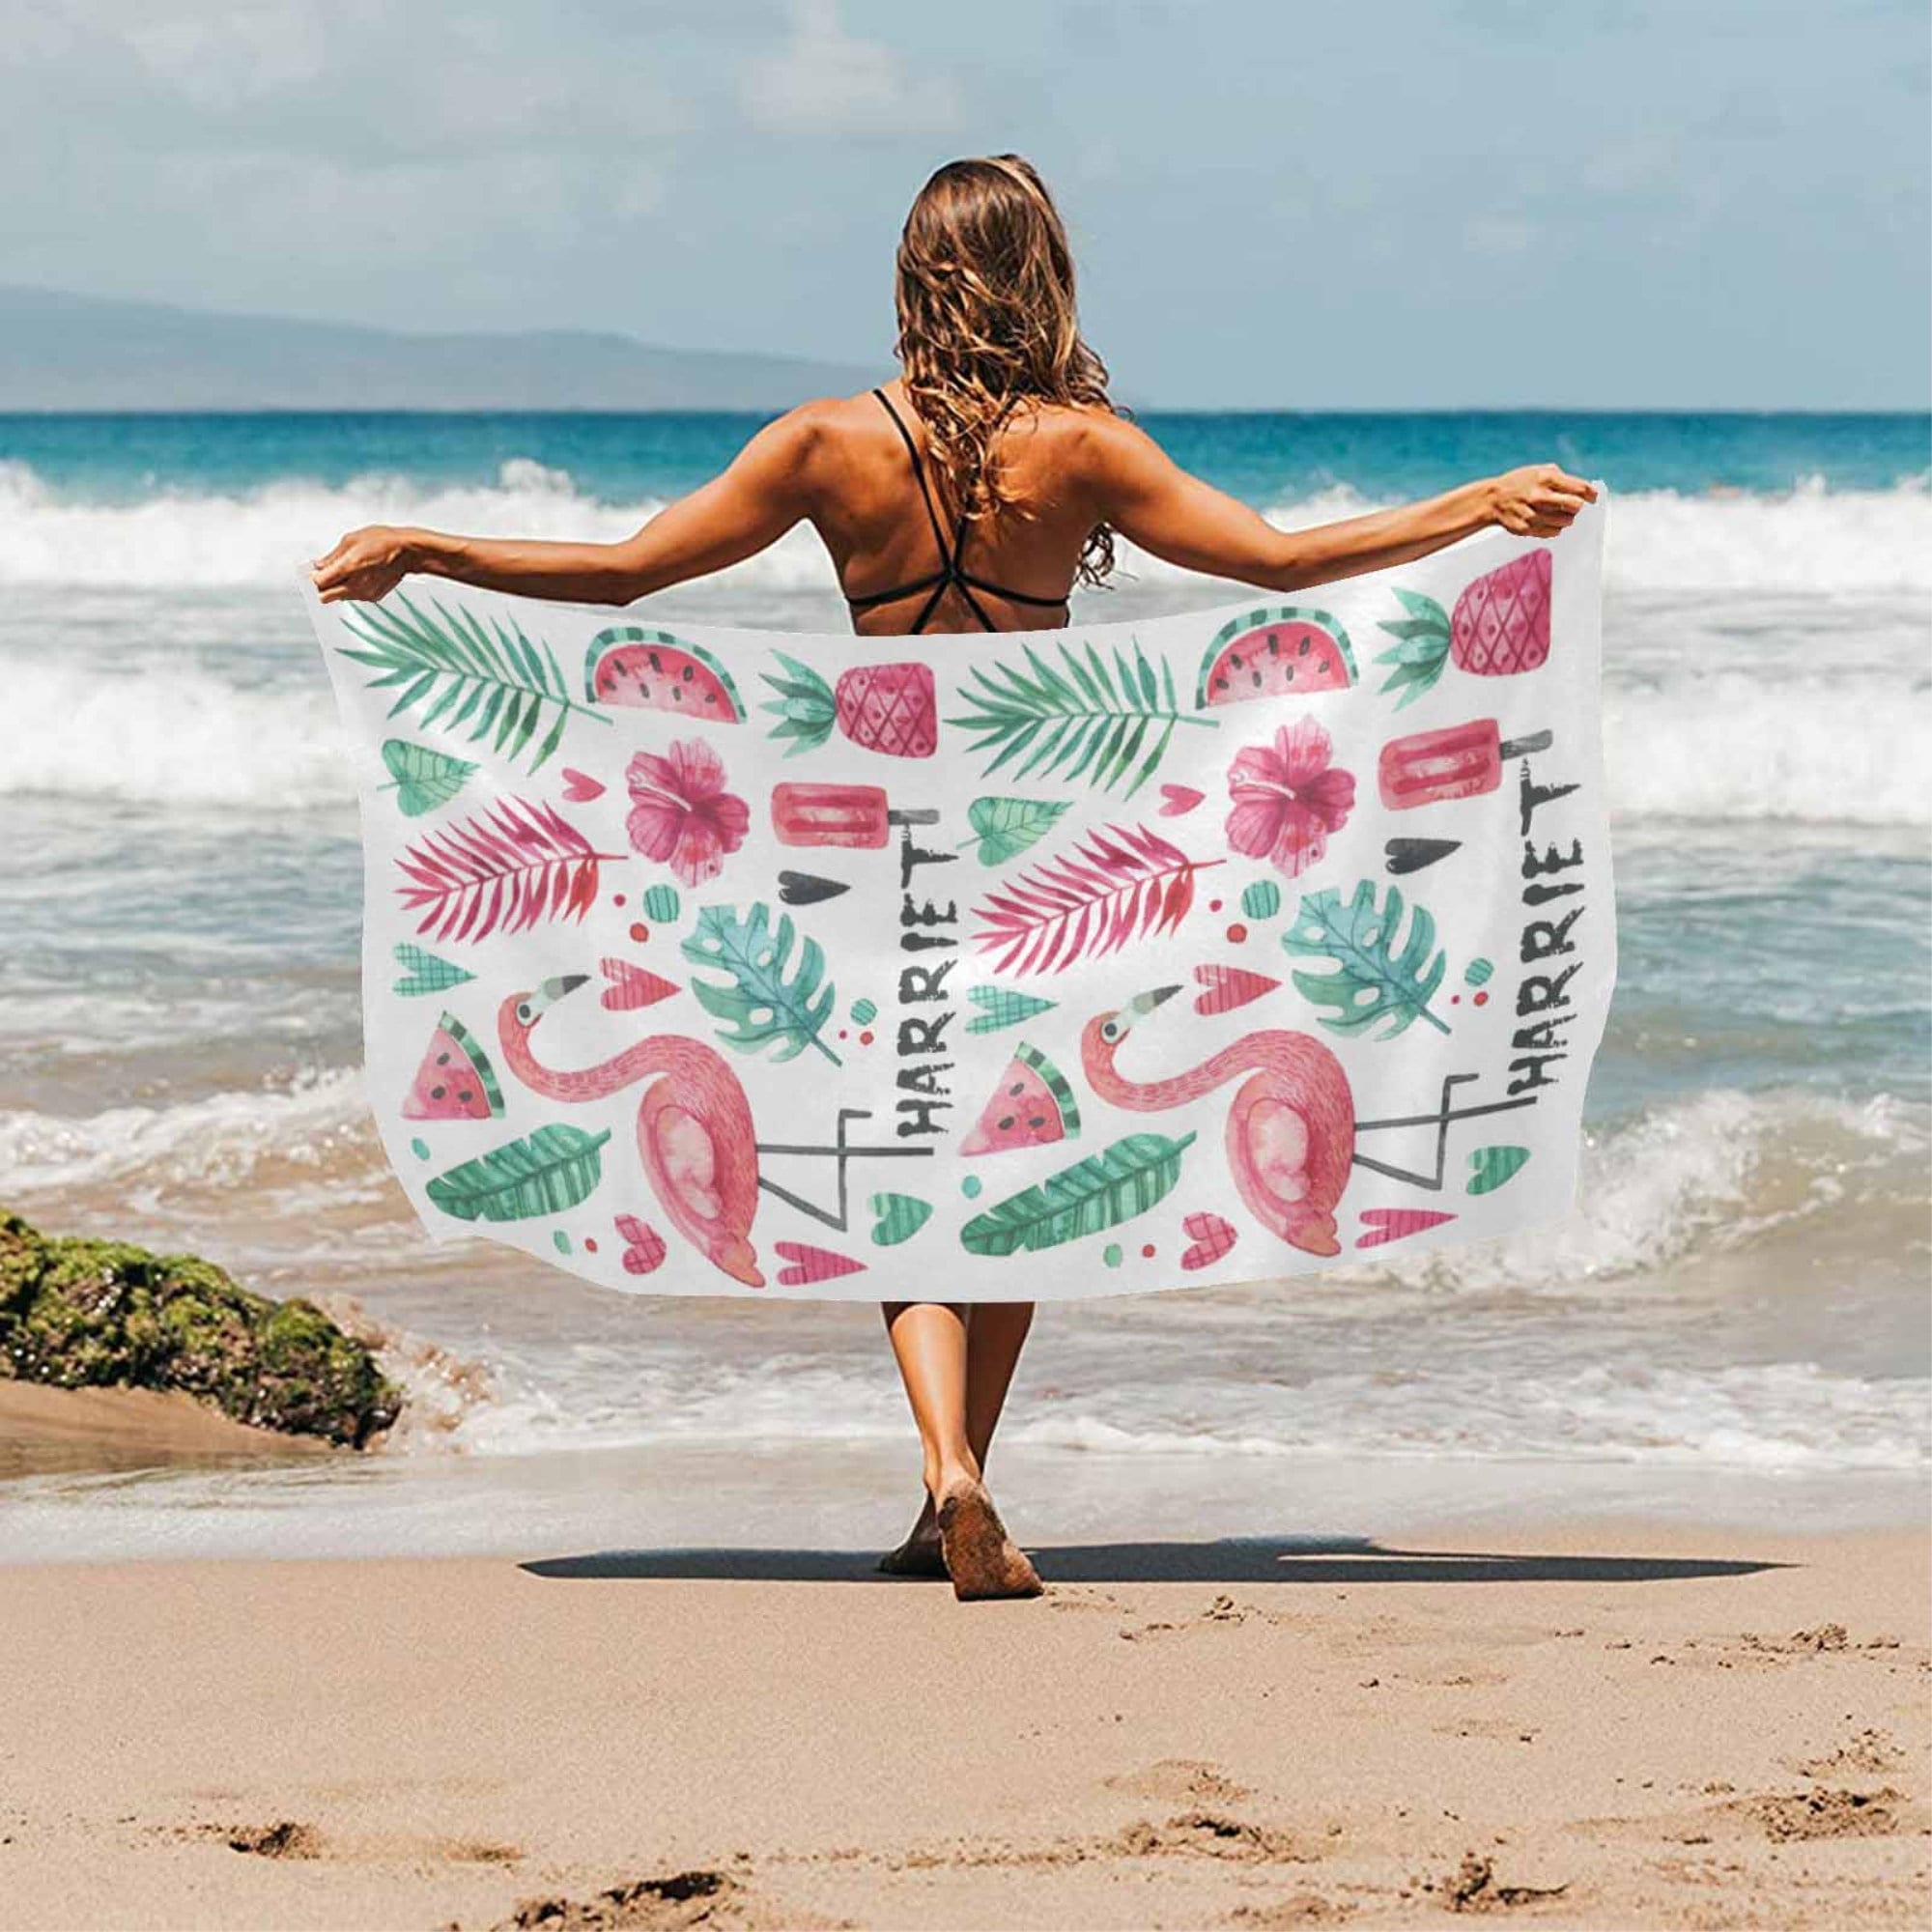 Beachy Flamingo Beach Towel Blanket With Tassels Throw Yoga Mat Picnic 予約販売品